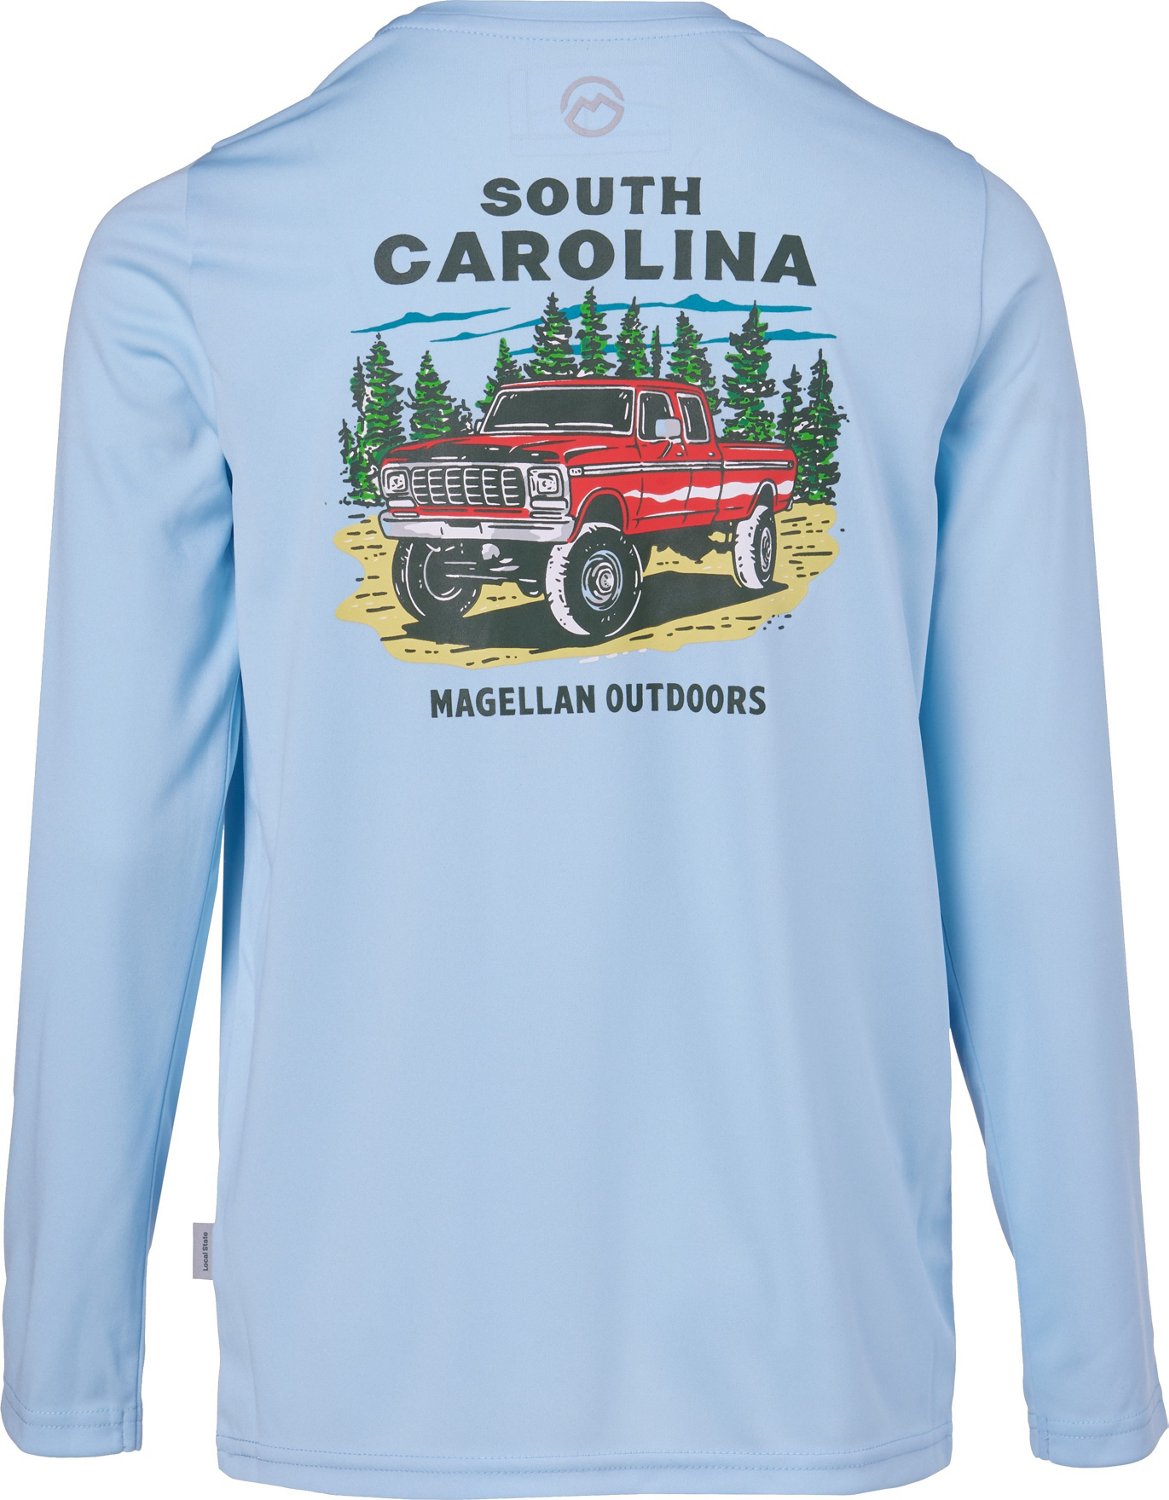 Magellan Outdoors Boys' South Carolina Local State Graphic Crew